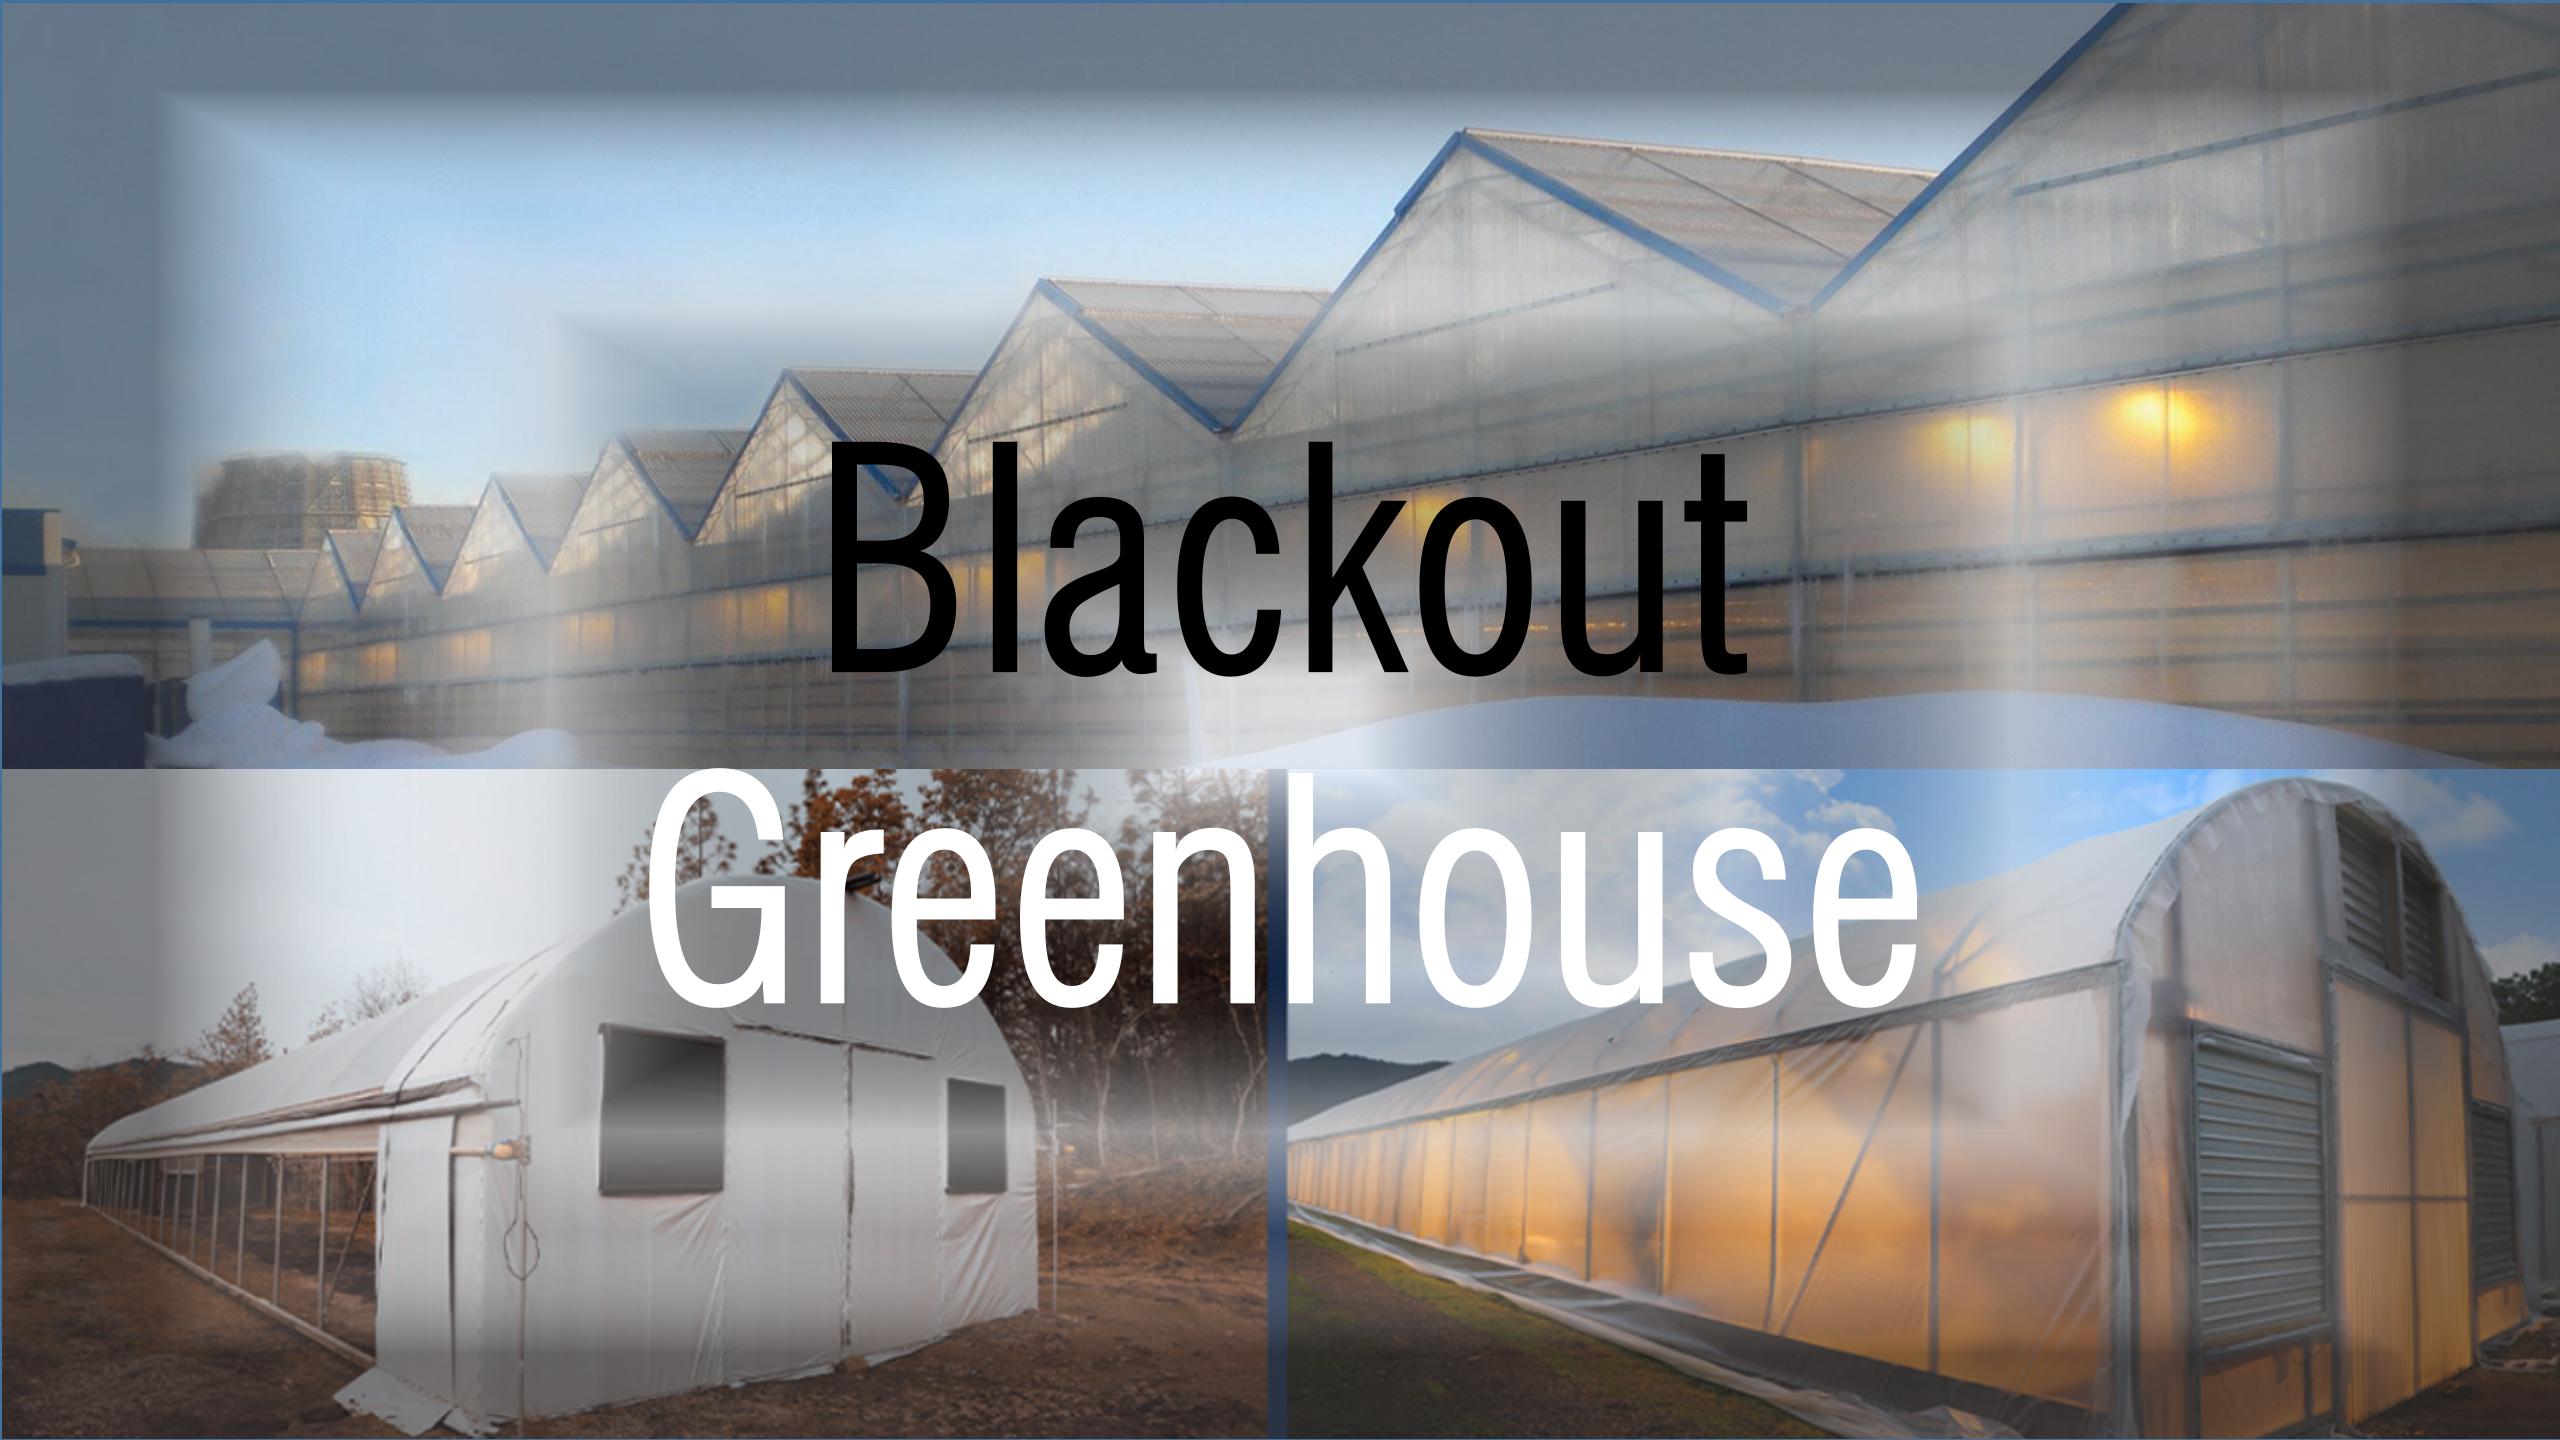 P2-Blackout greenhouse at tradisyonal na greenhouse